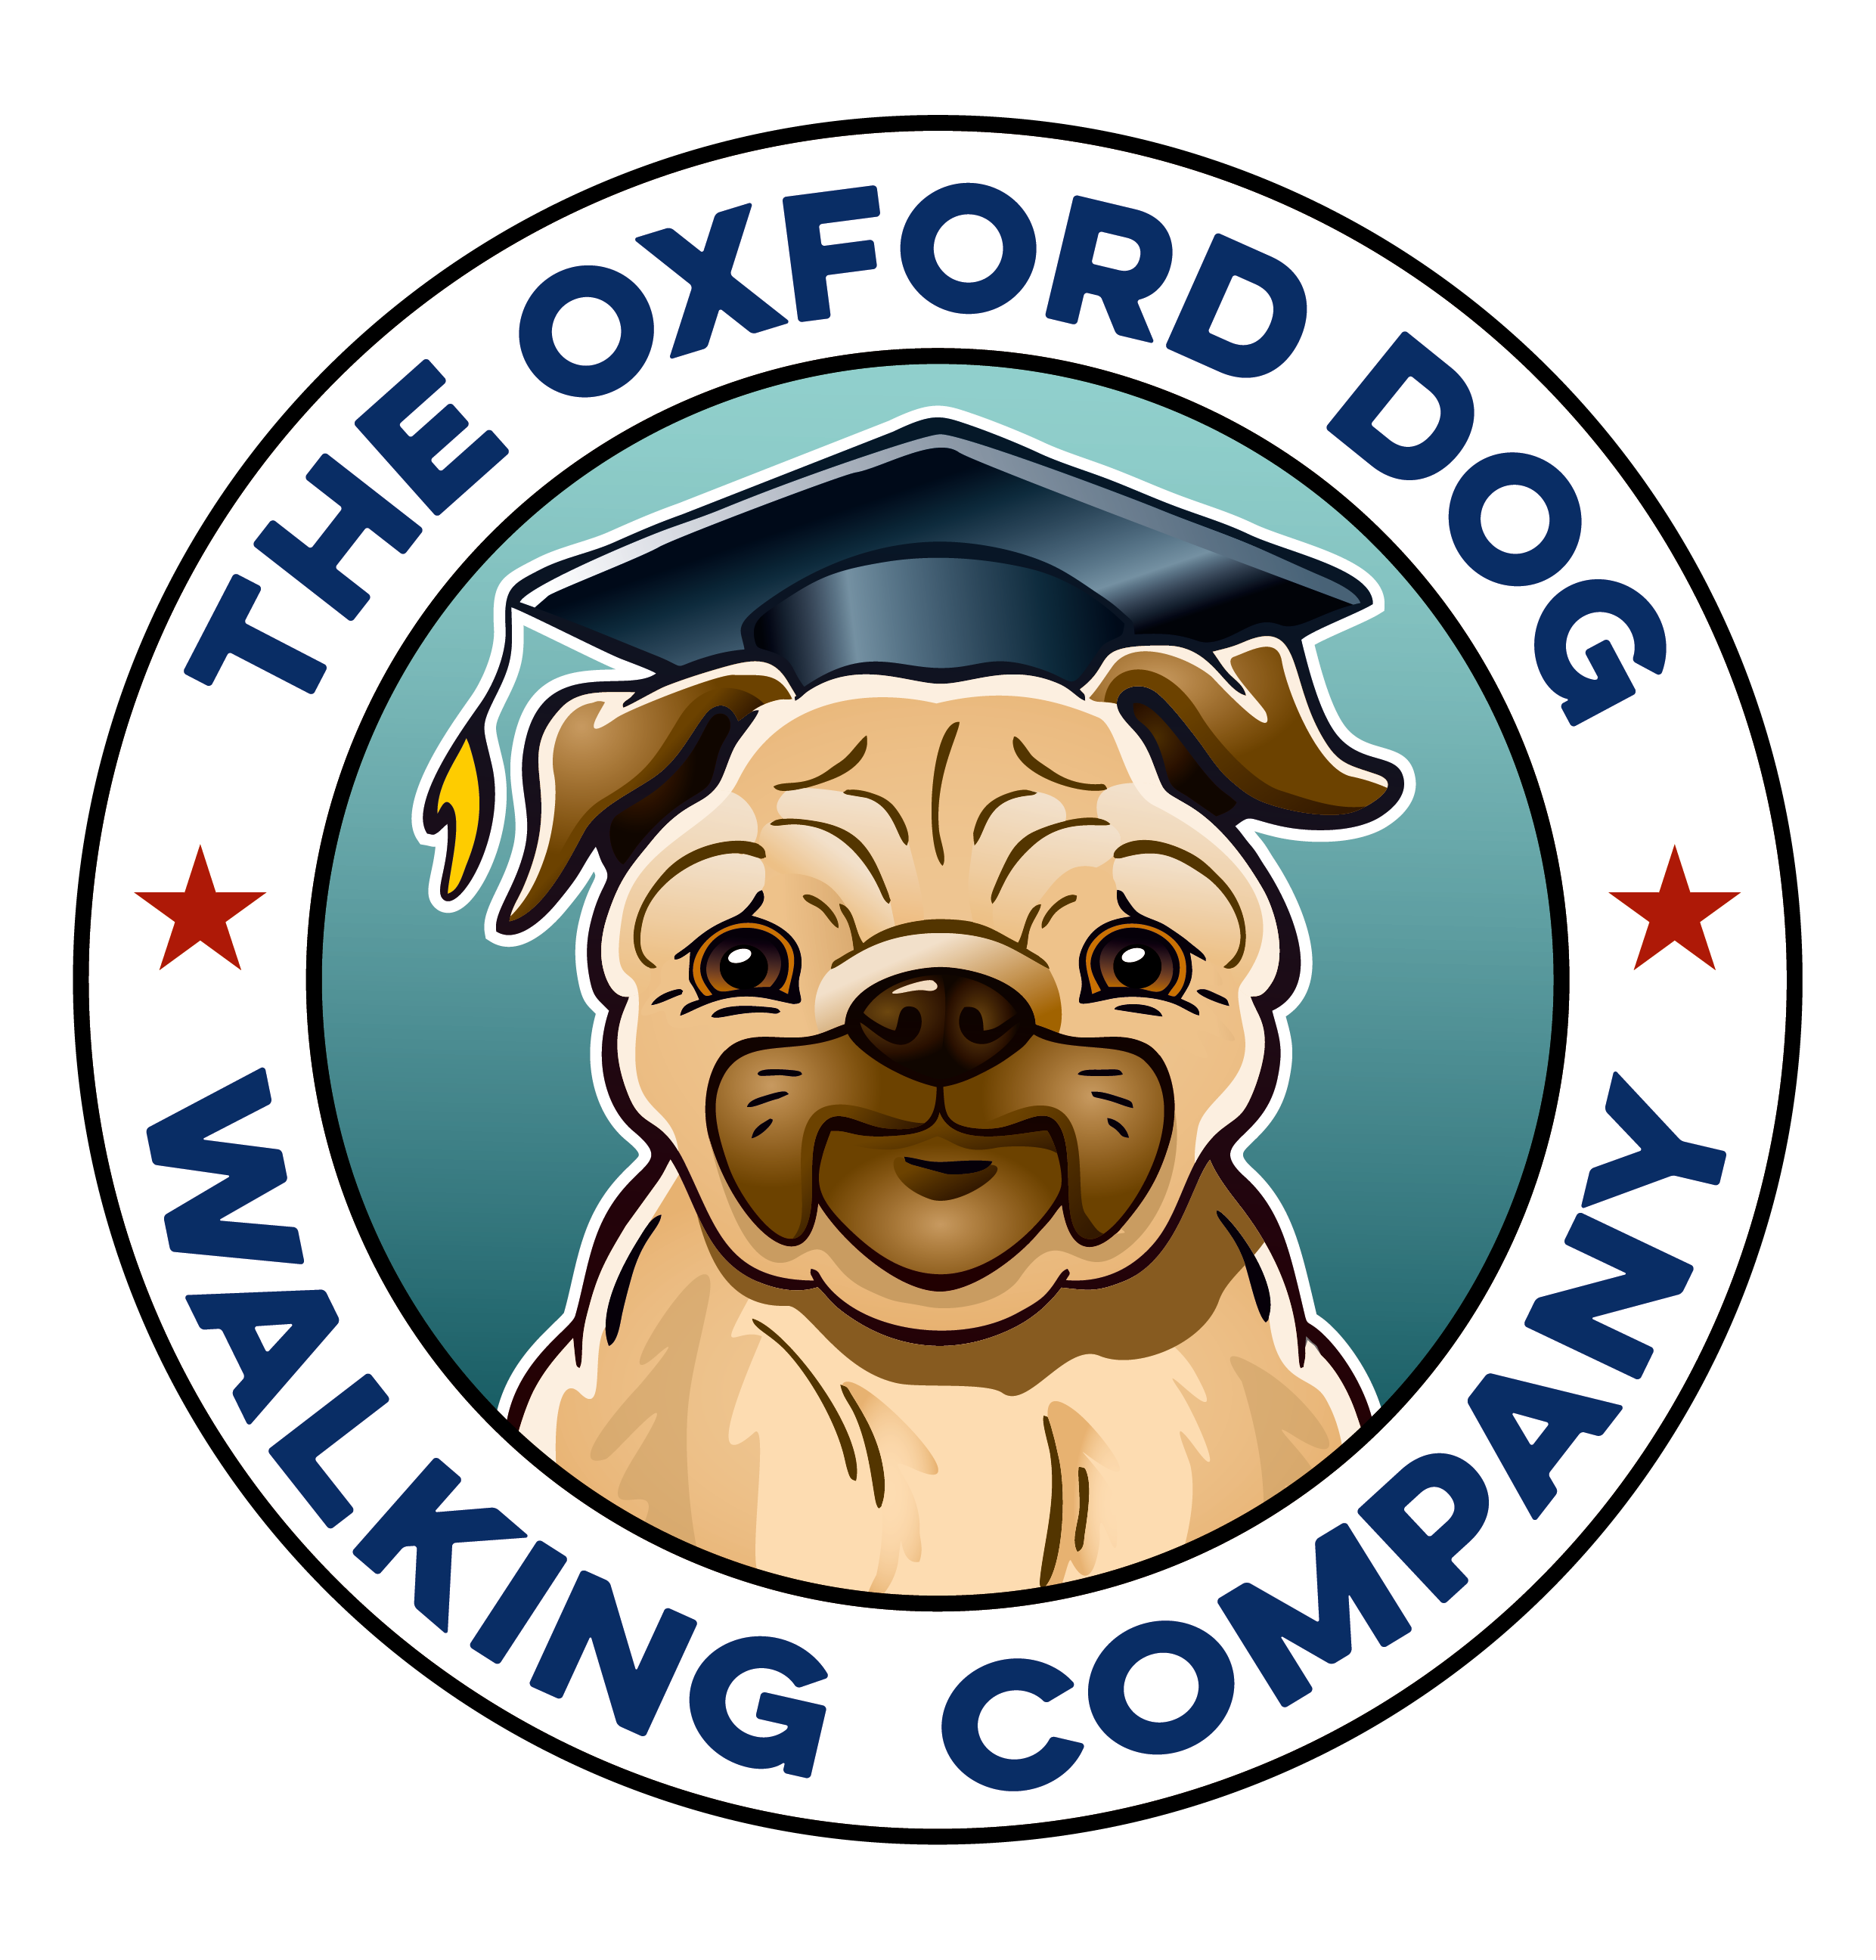 Oxford Dog Walking Company